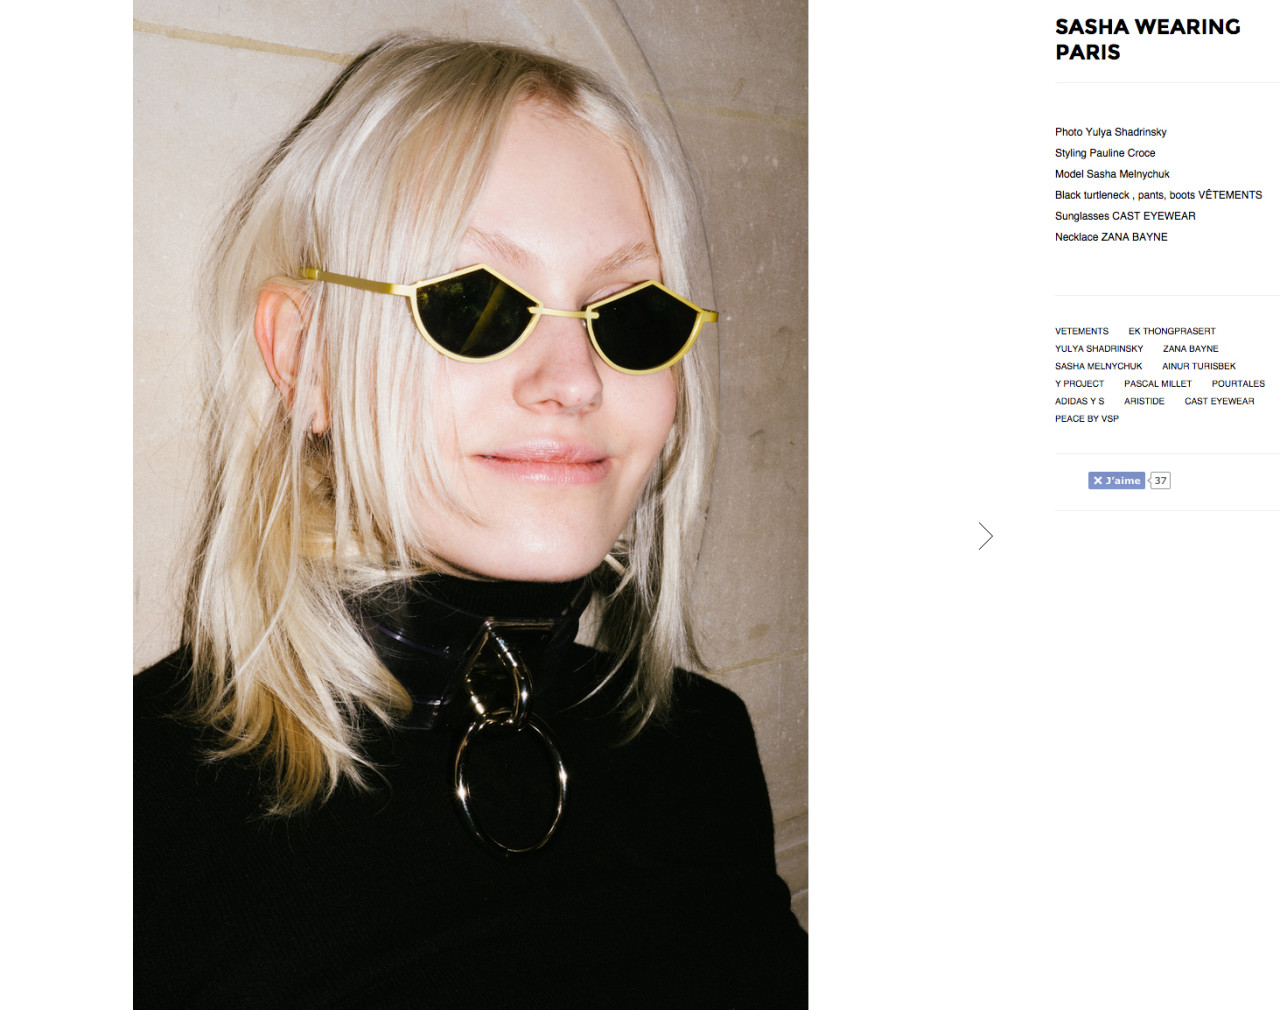 CAST Eyewear on Caroline daily - Paris - PUBLIC IMAGE PR | fashion ...